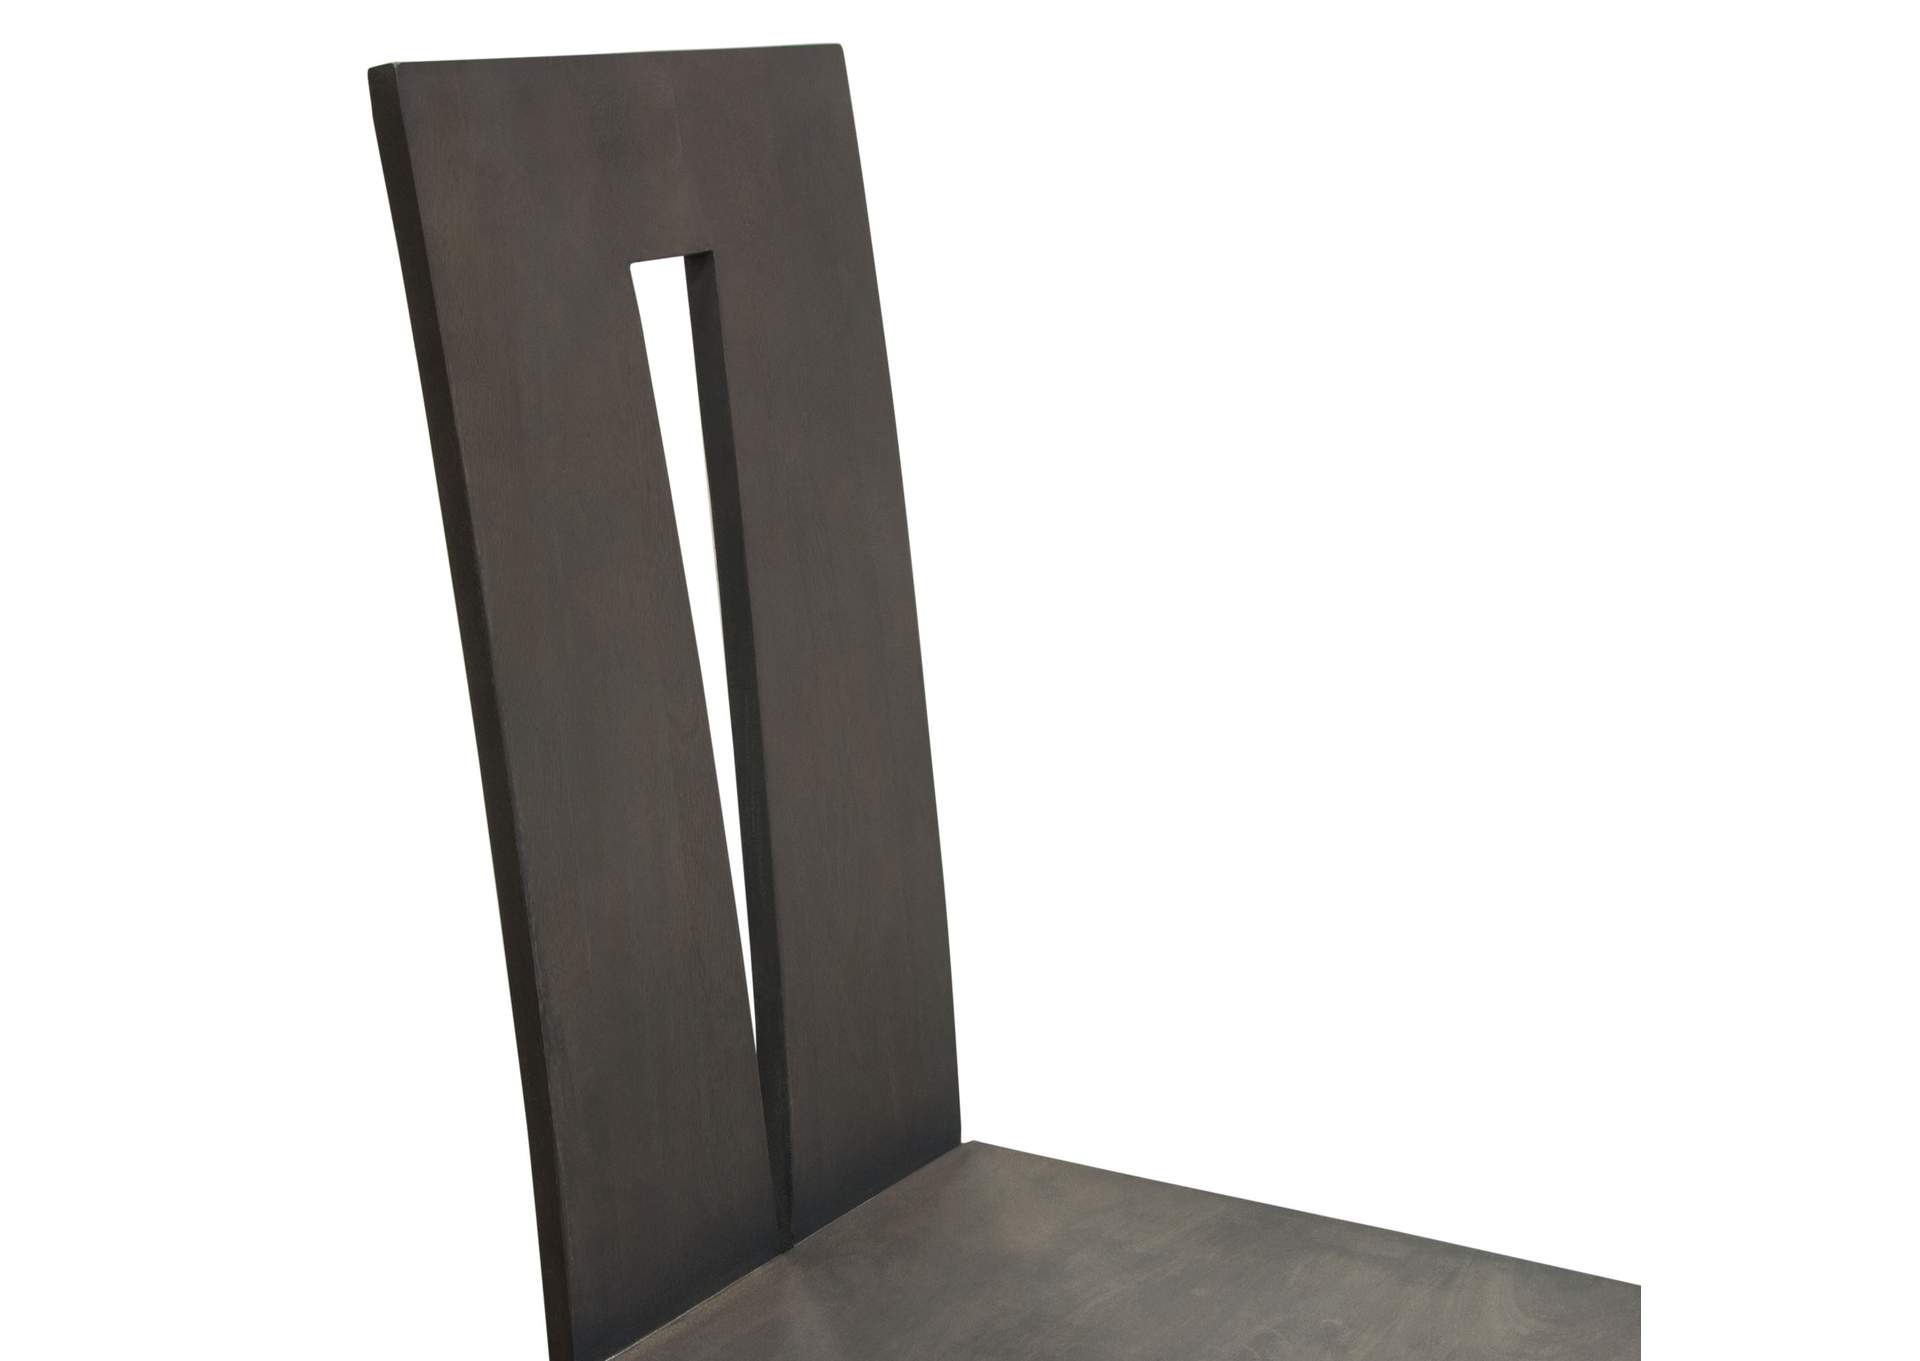 Motion 2-Pack Solid Mango Wood Dining Chair in Smoke Grey Finish w/ Silver Metal Inlay by Diamond Sofa,Diamond Sofa